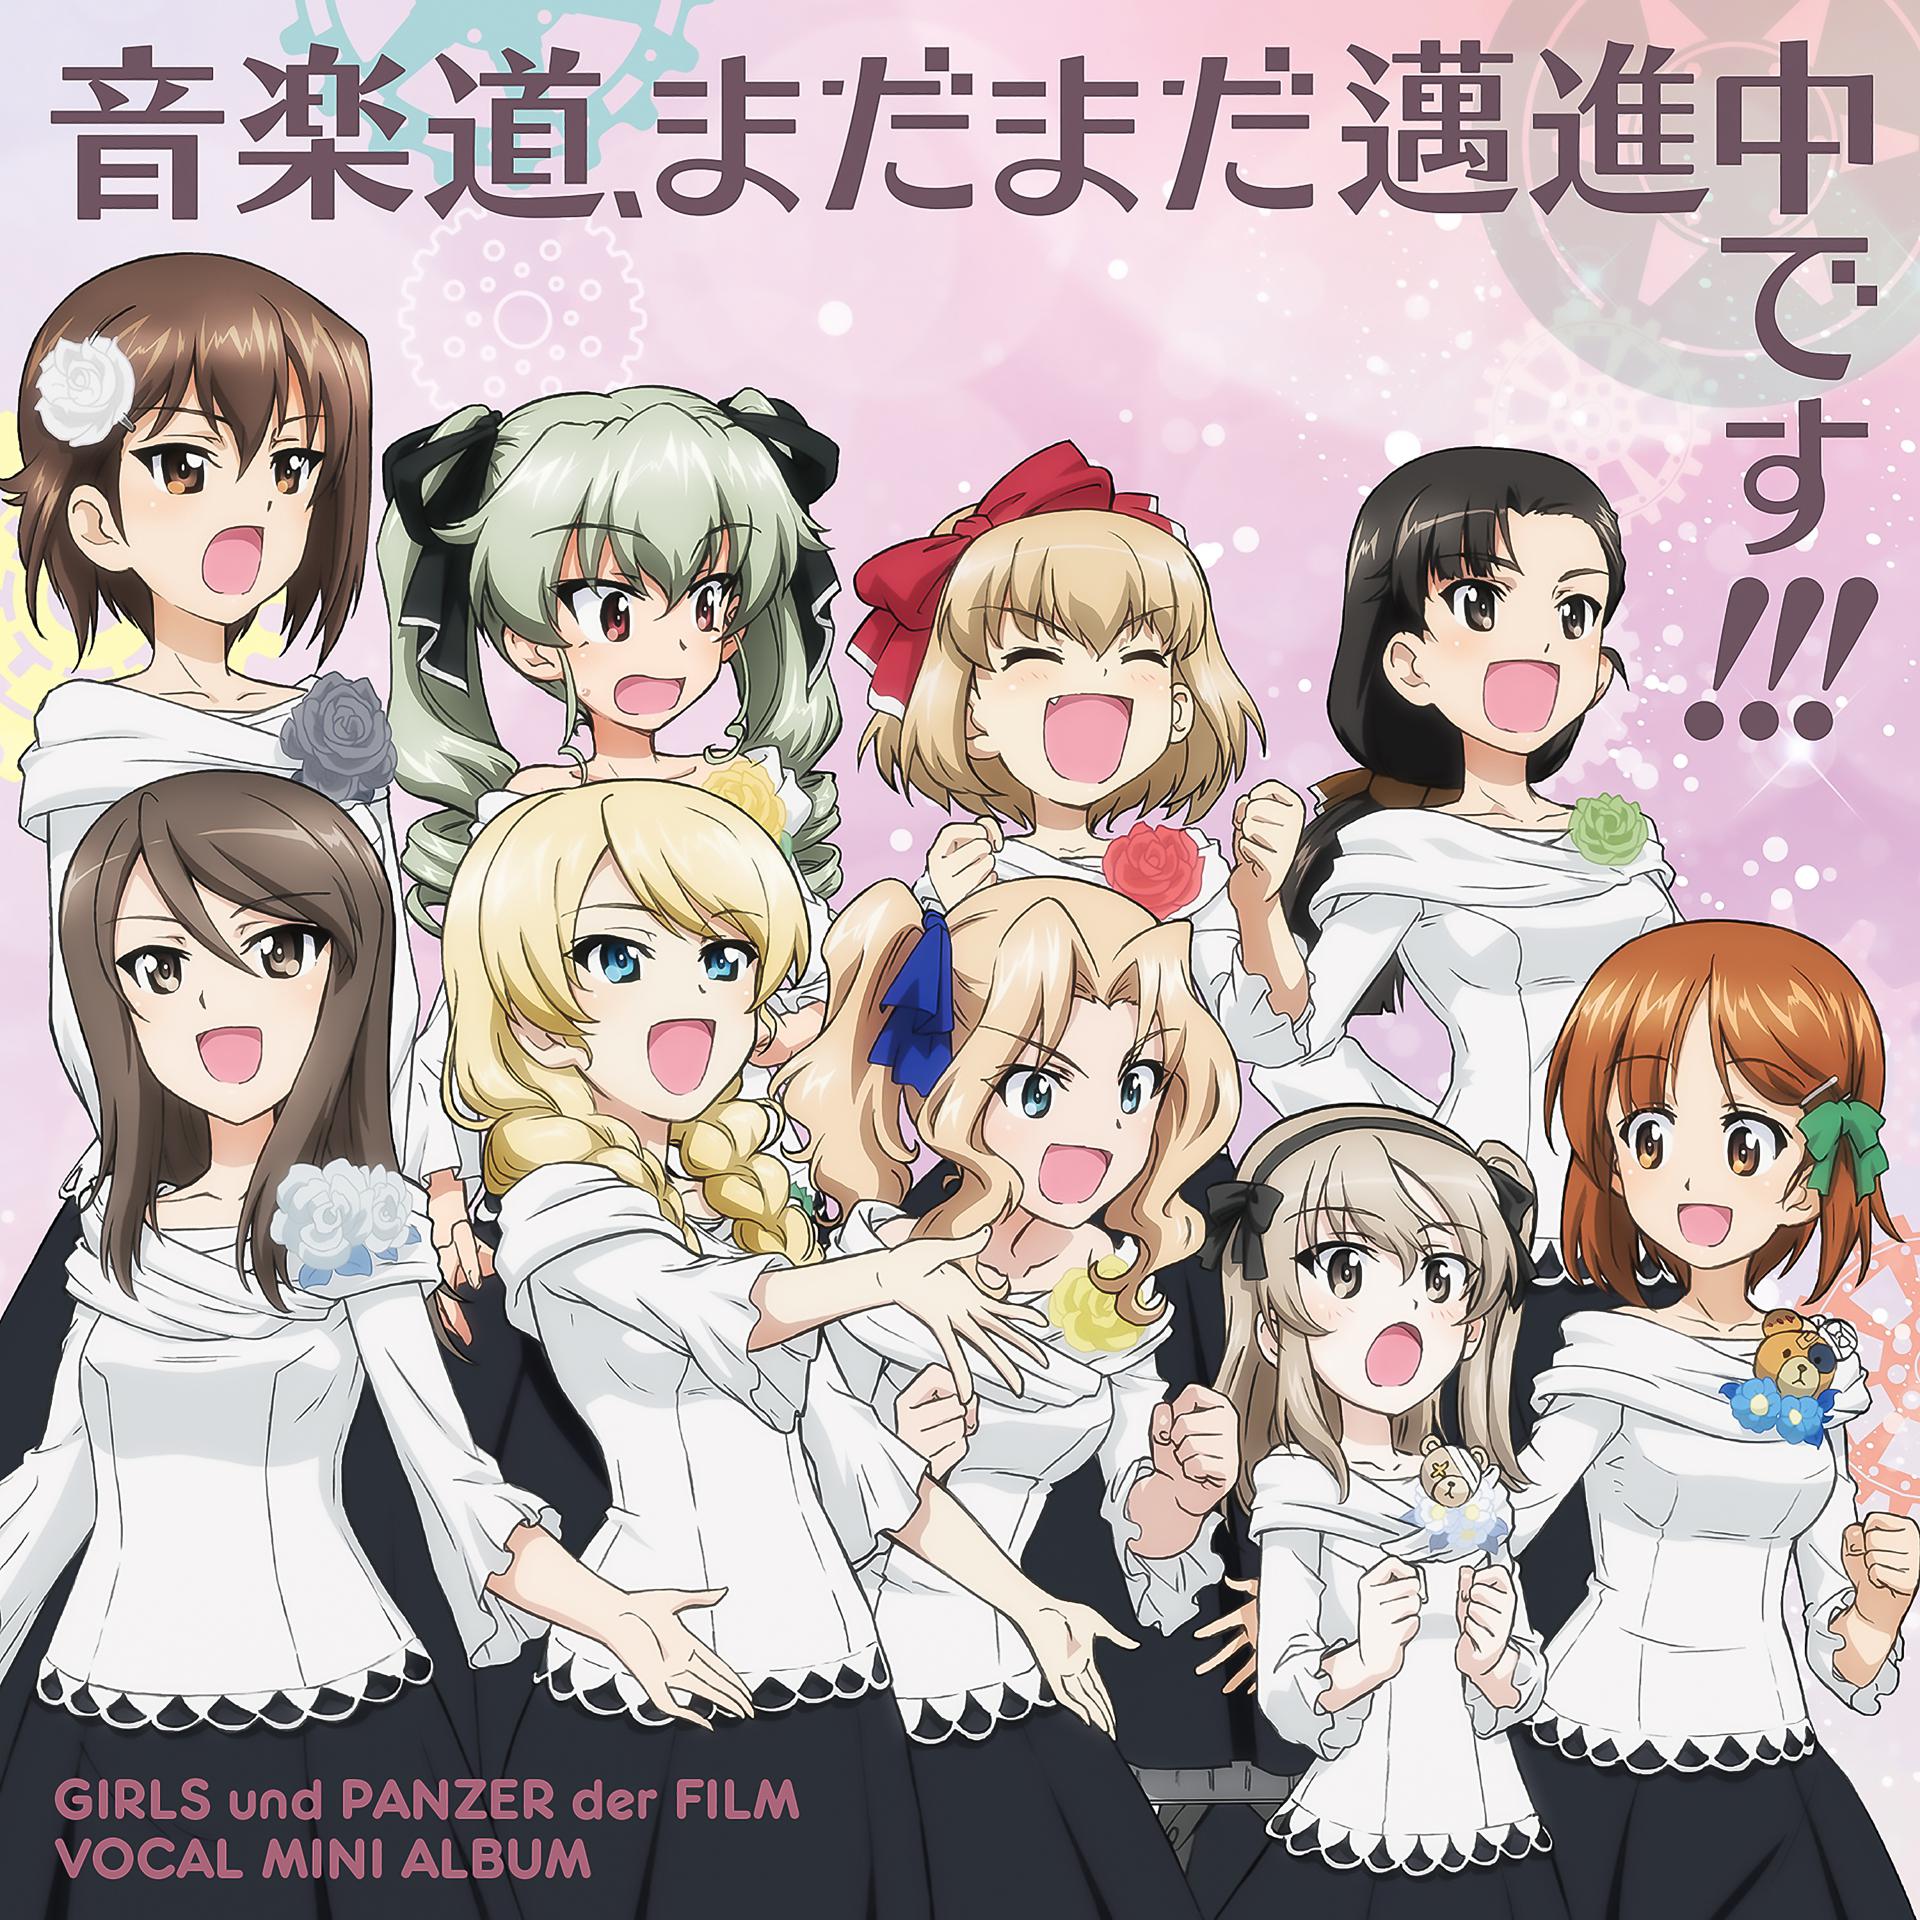 Постер альбома "GIRLS und PANZER der FILM" Vocal Mini Album: Ongakudo, Madamada Maishinchu desu!!!